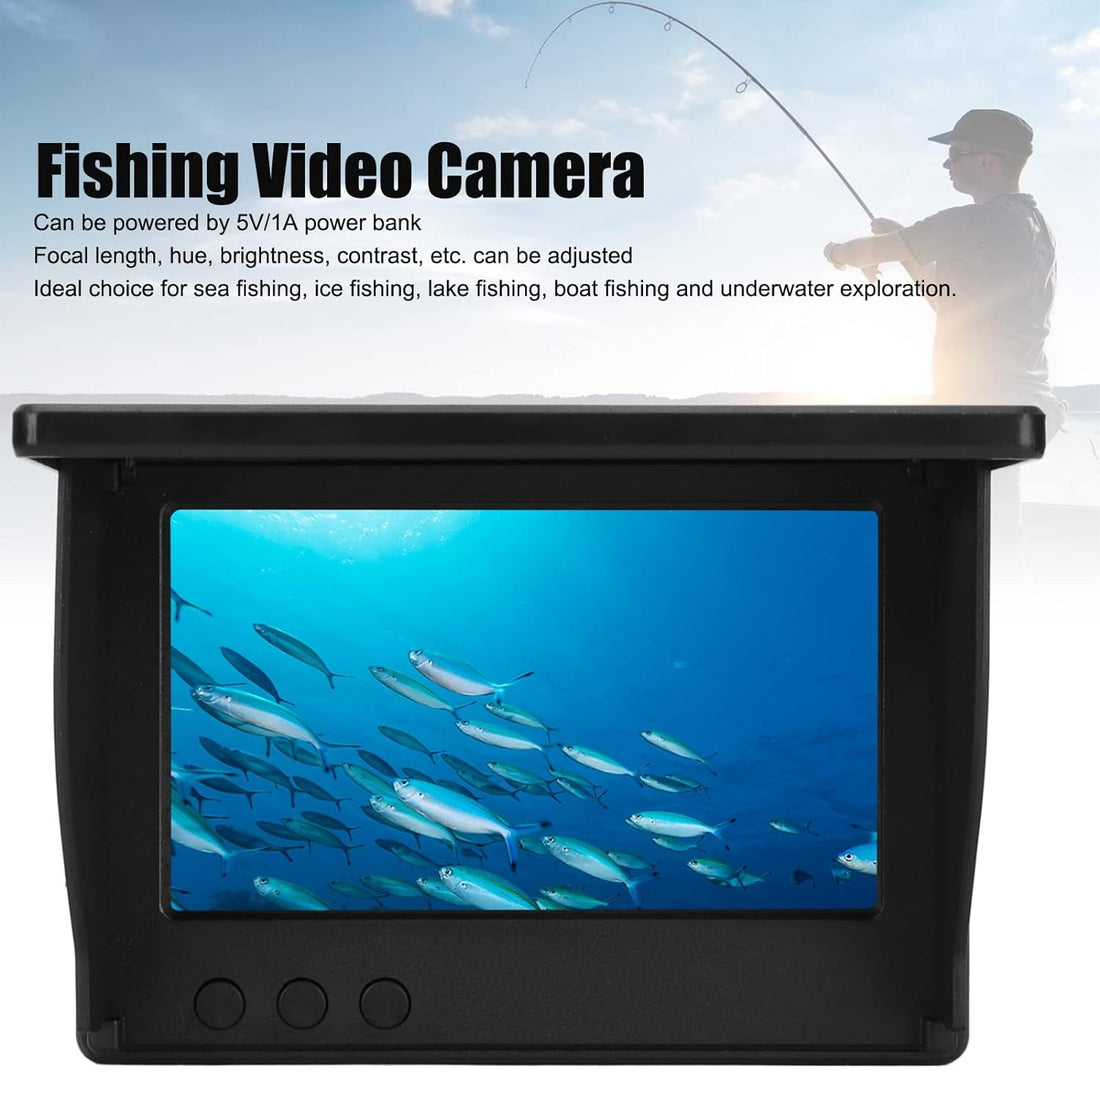 Underwater Fishing Camera Portable Video Fish Finder Underwater Fishing Camera Kit with 4.3in LCD Monitor IP67 Deep Waterproof for Sea Ice Lake Boat Fishing